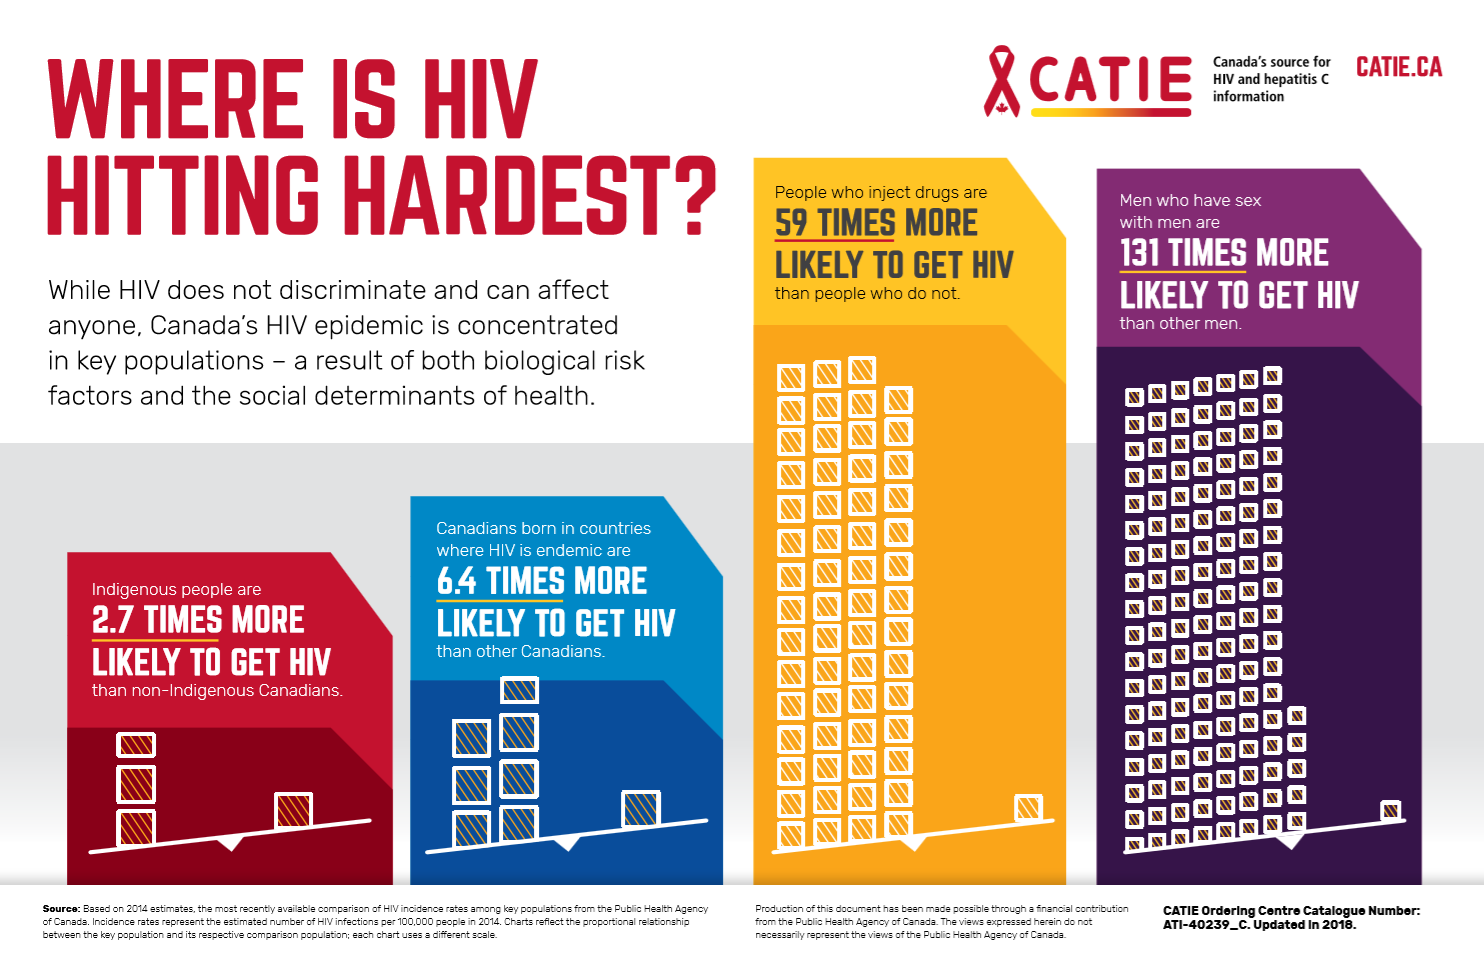 Where is HIV hitting hardest?